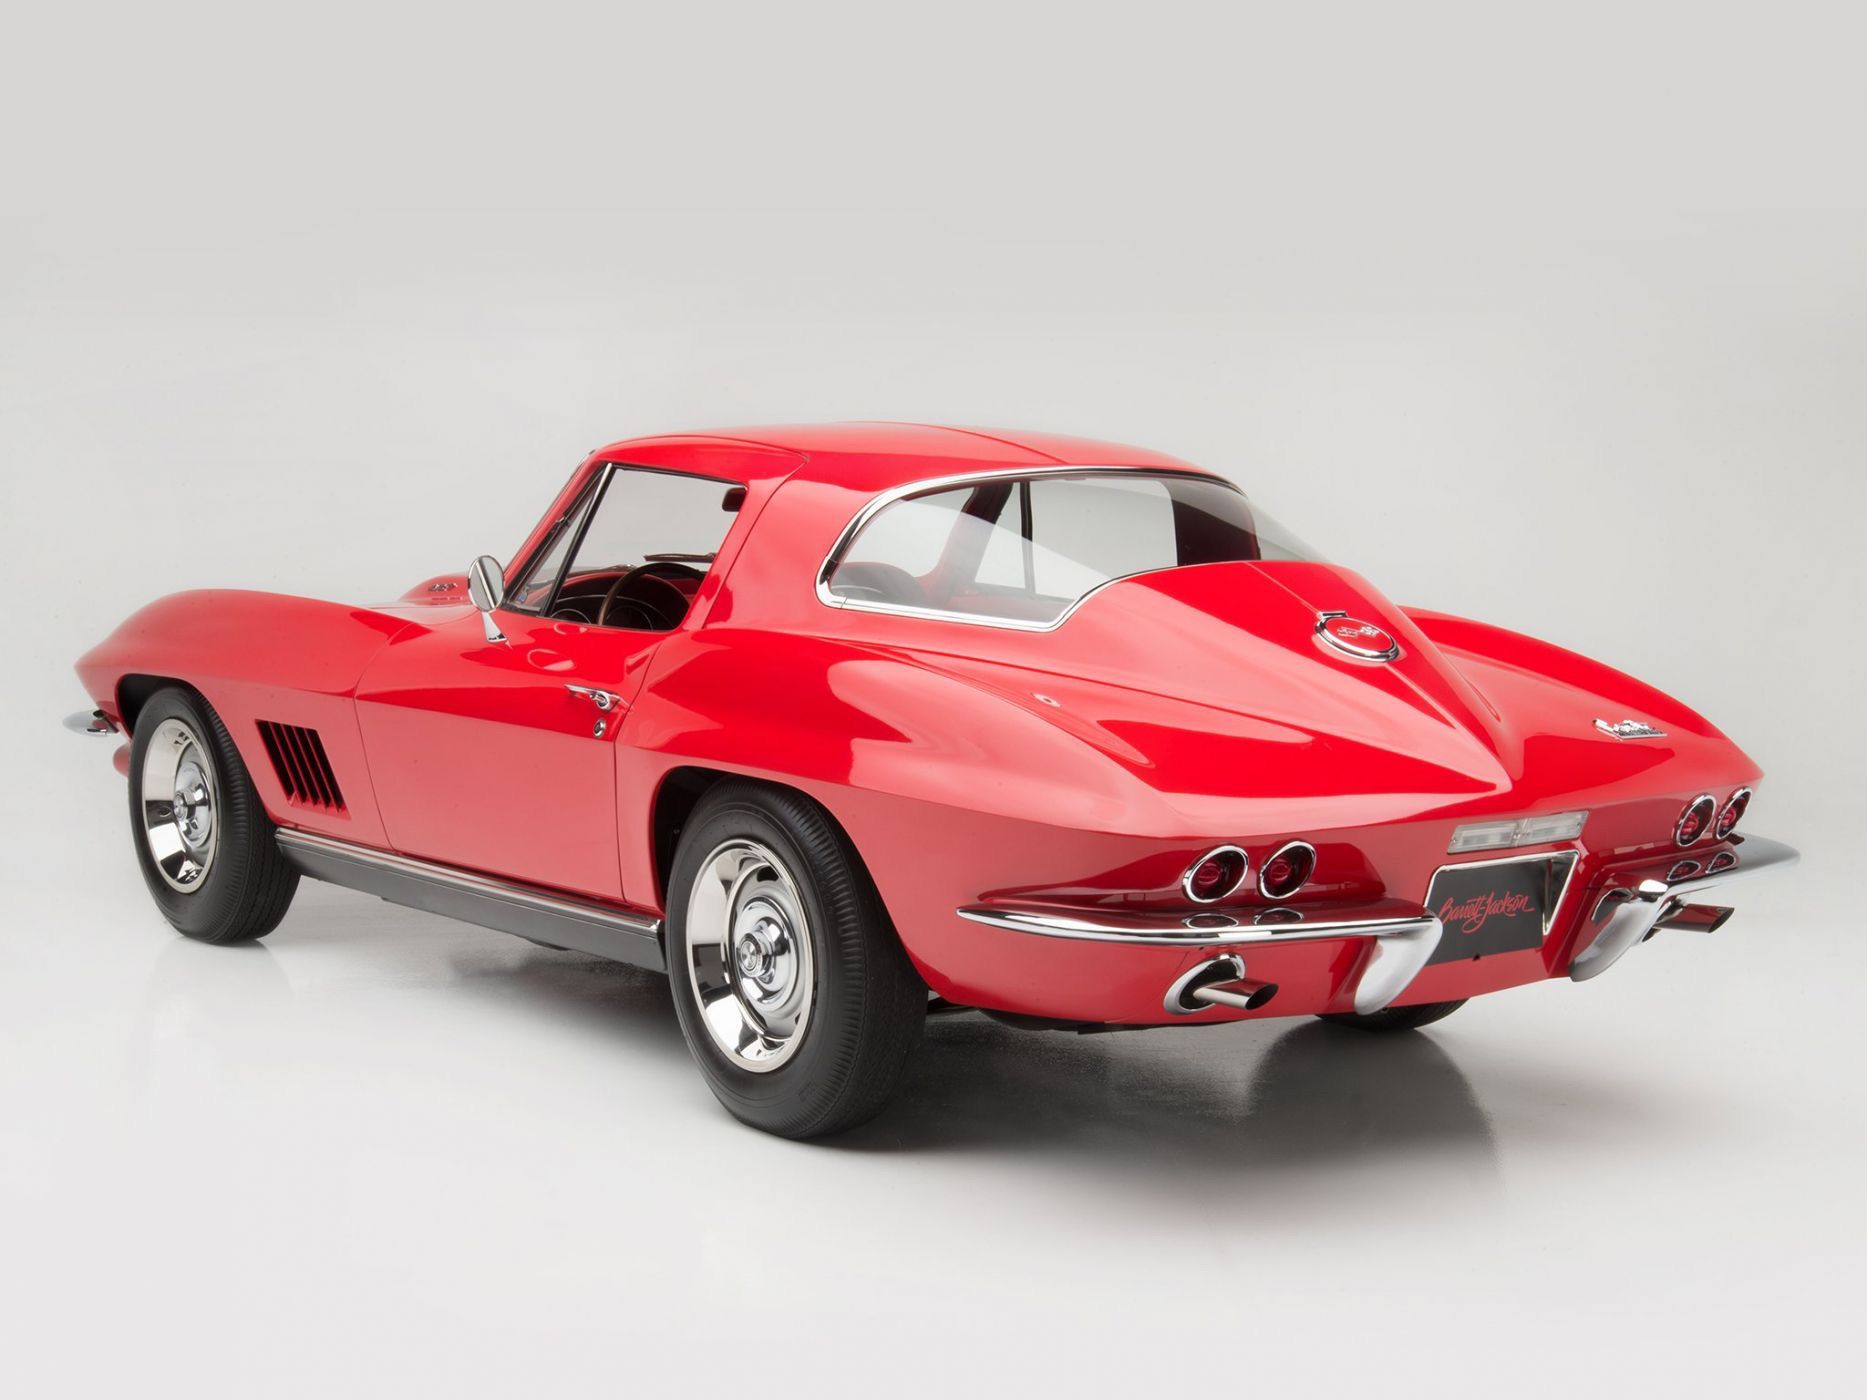 Red 1967 L88 Corvette sold at Barrett-Jackson Auction